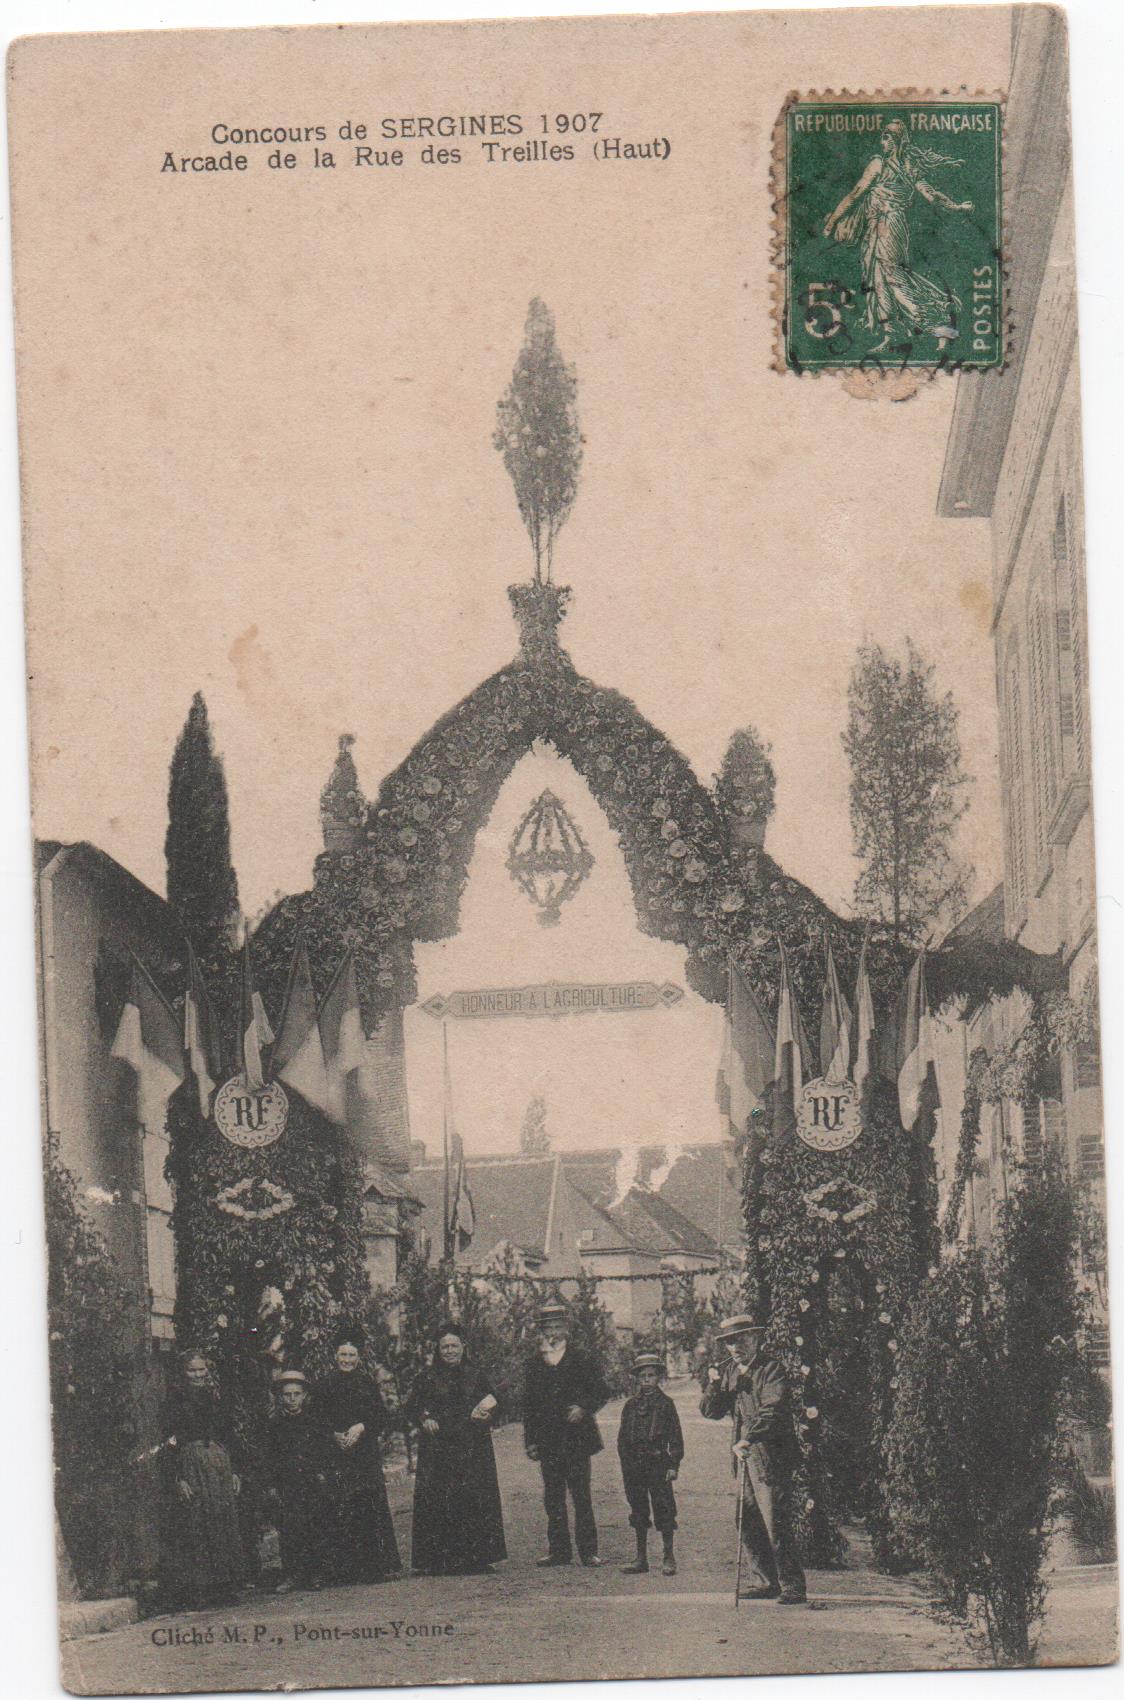 concours 1907 arcade rue des treilles